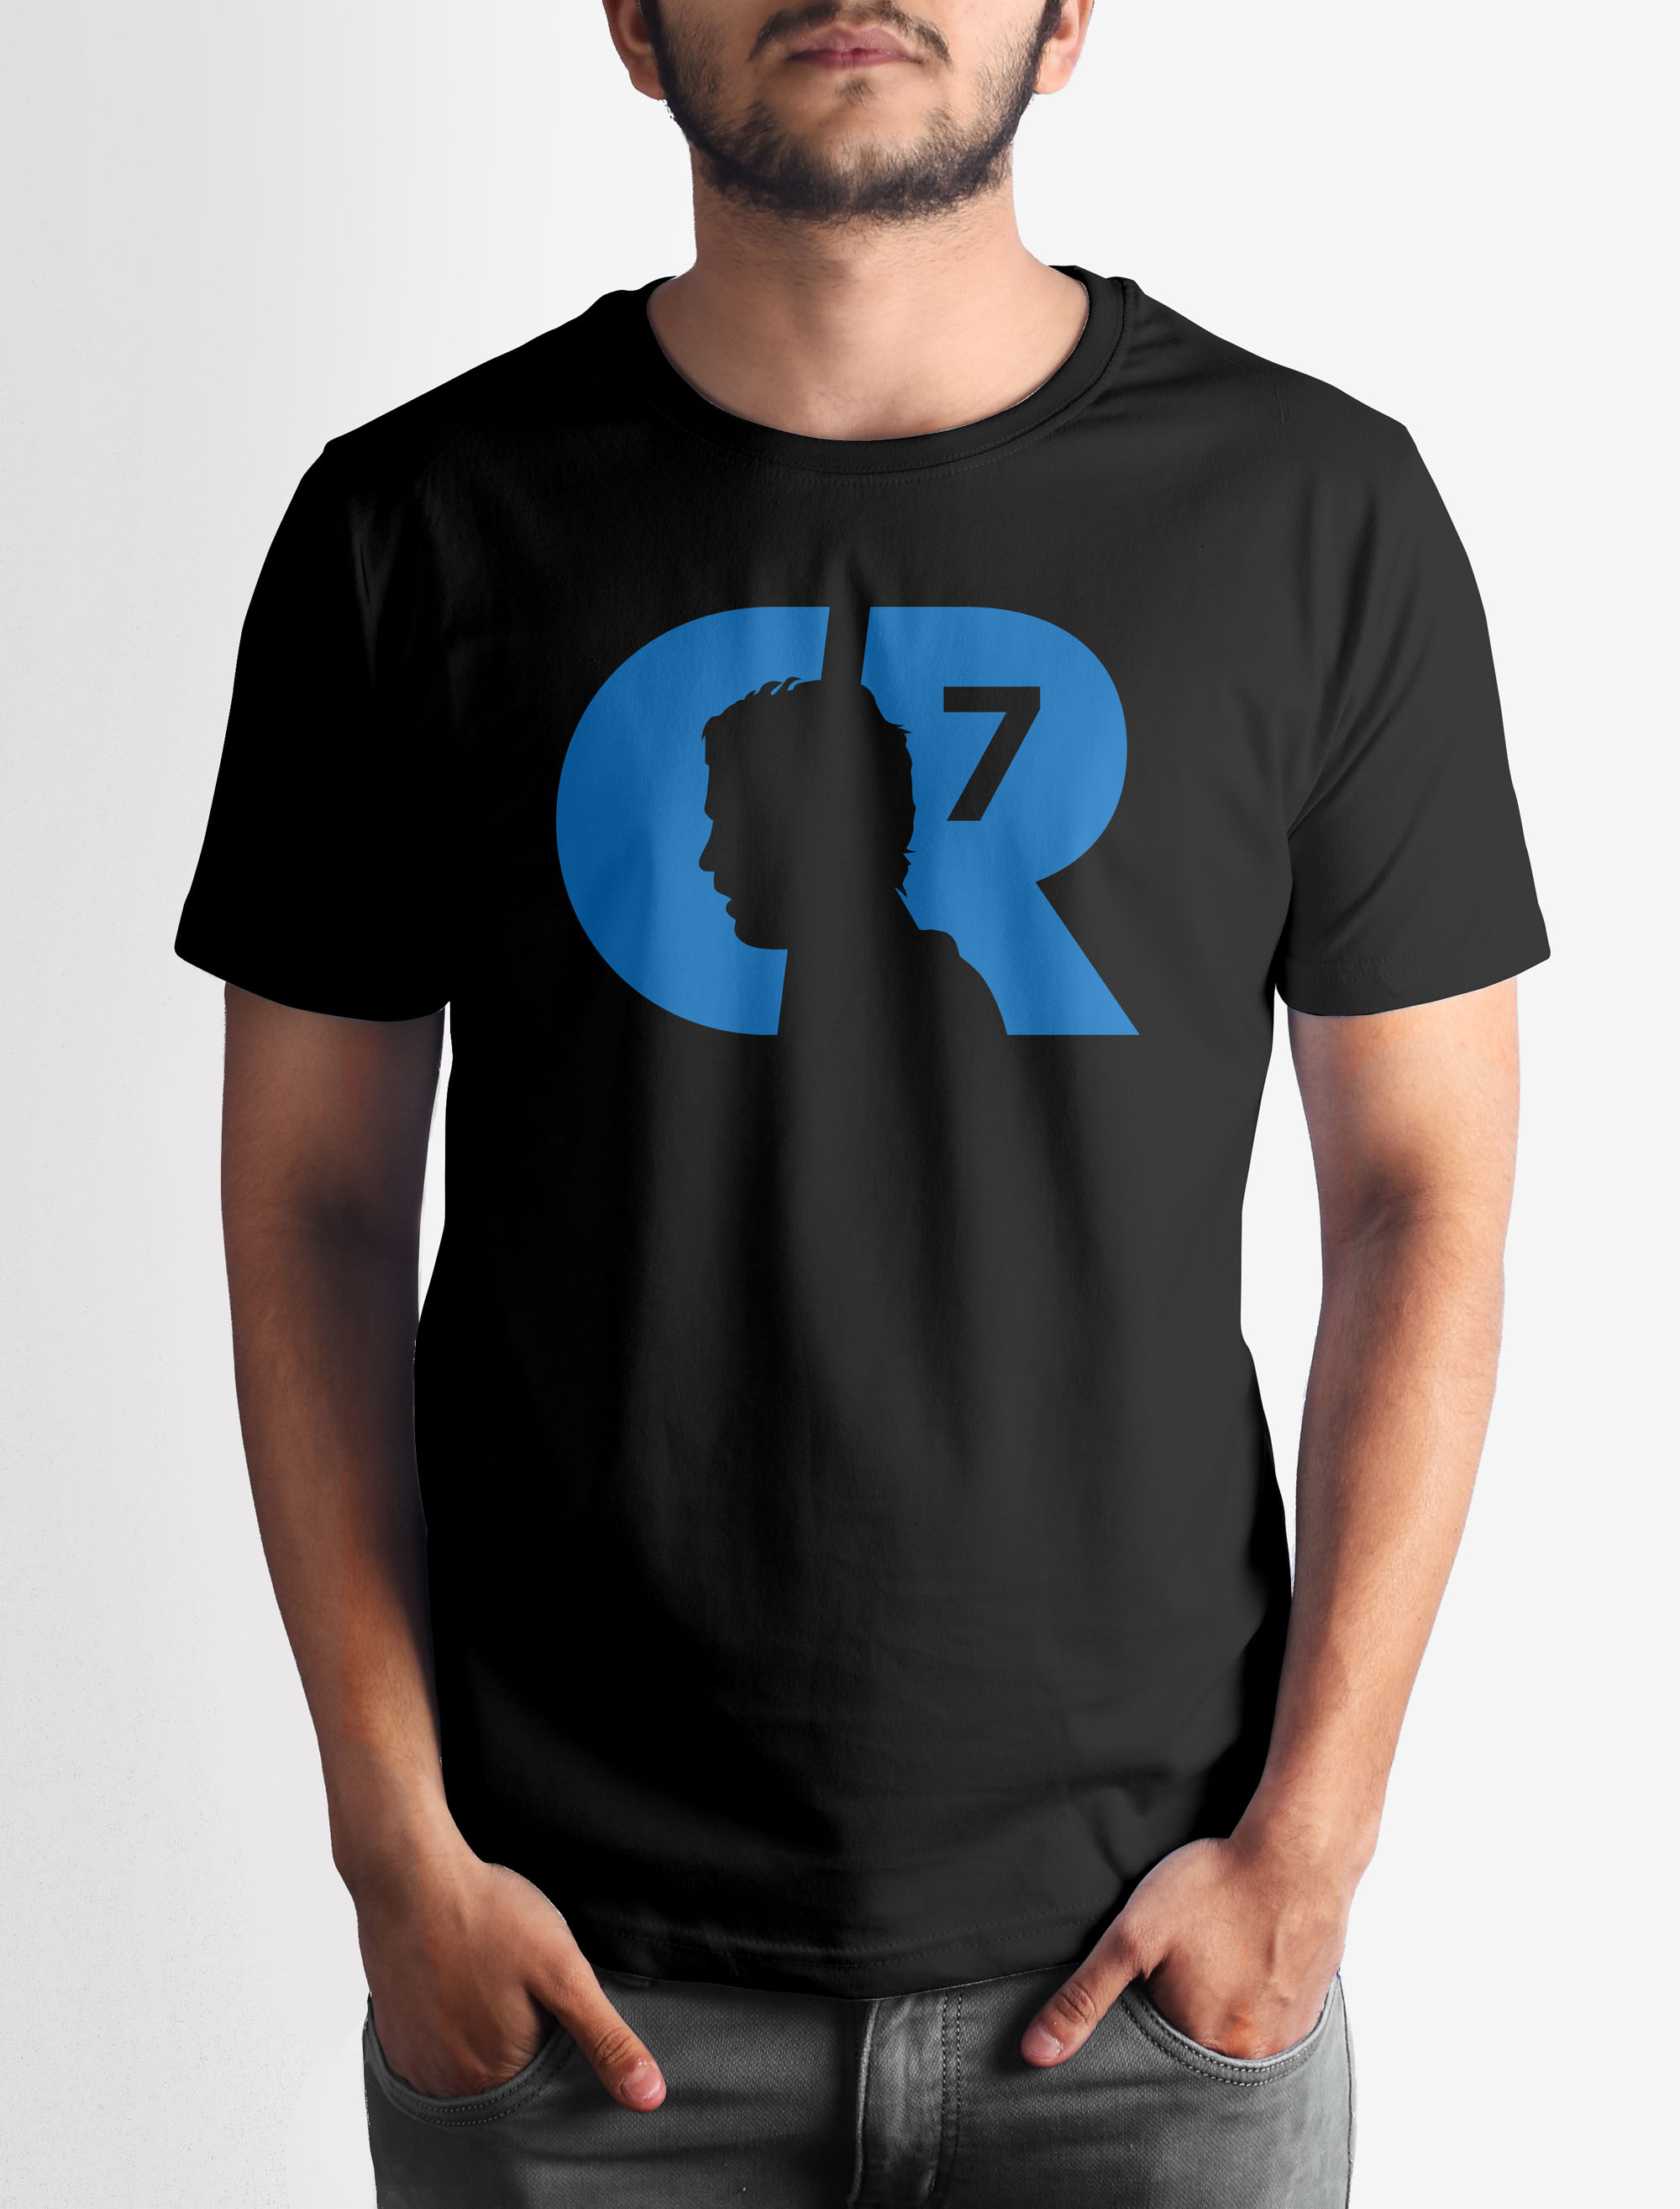 cr7 t shirt india